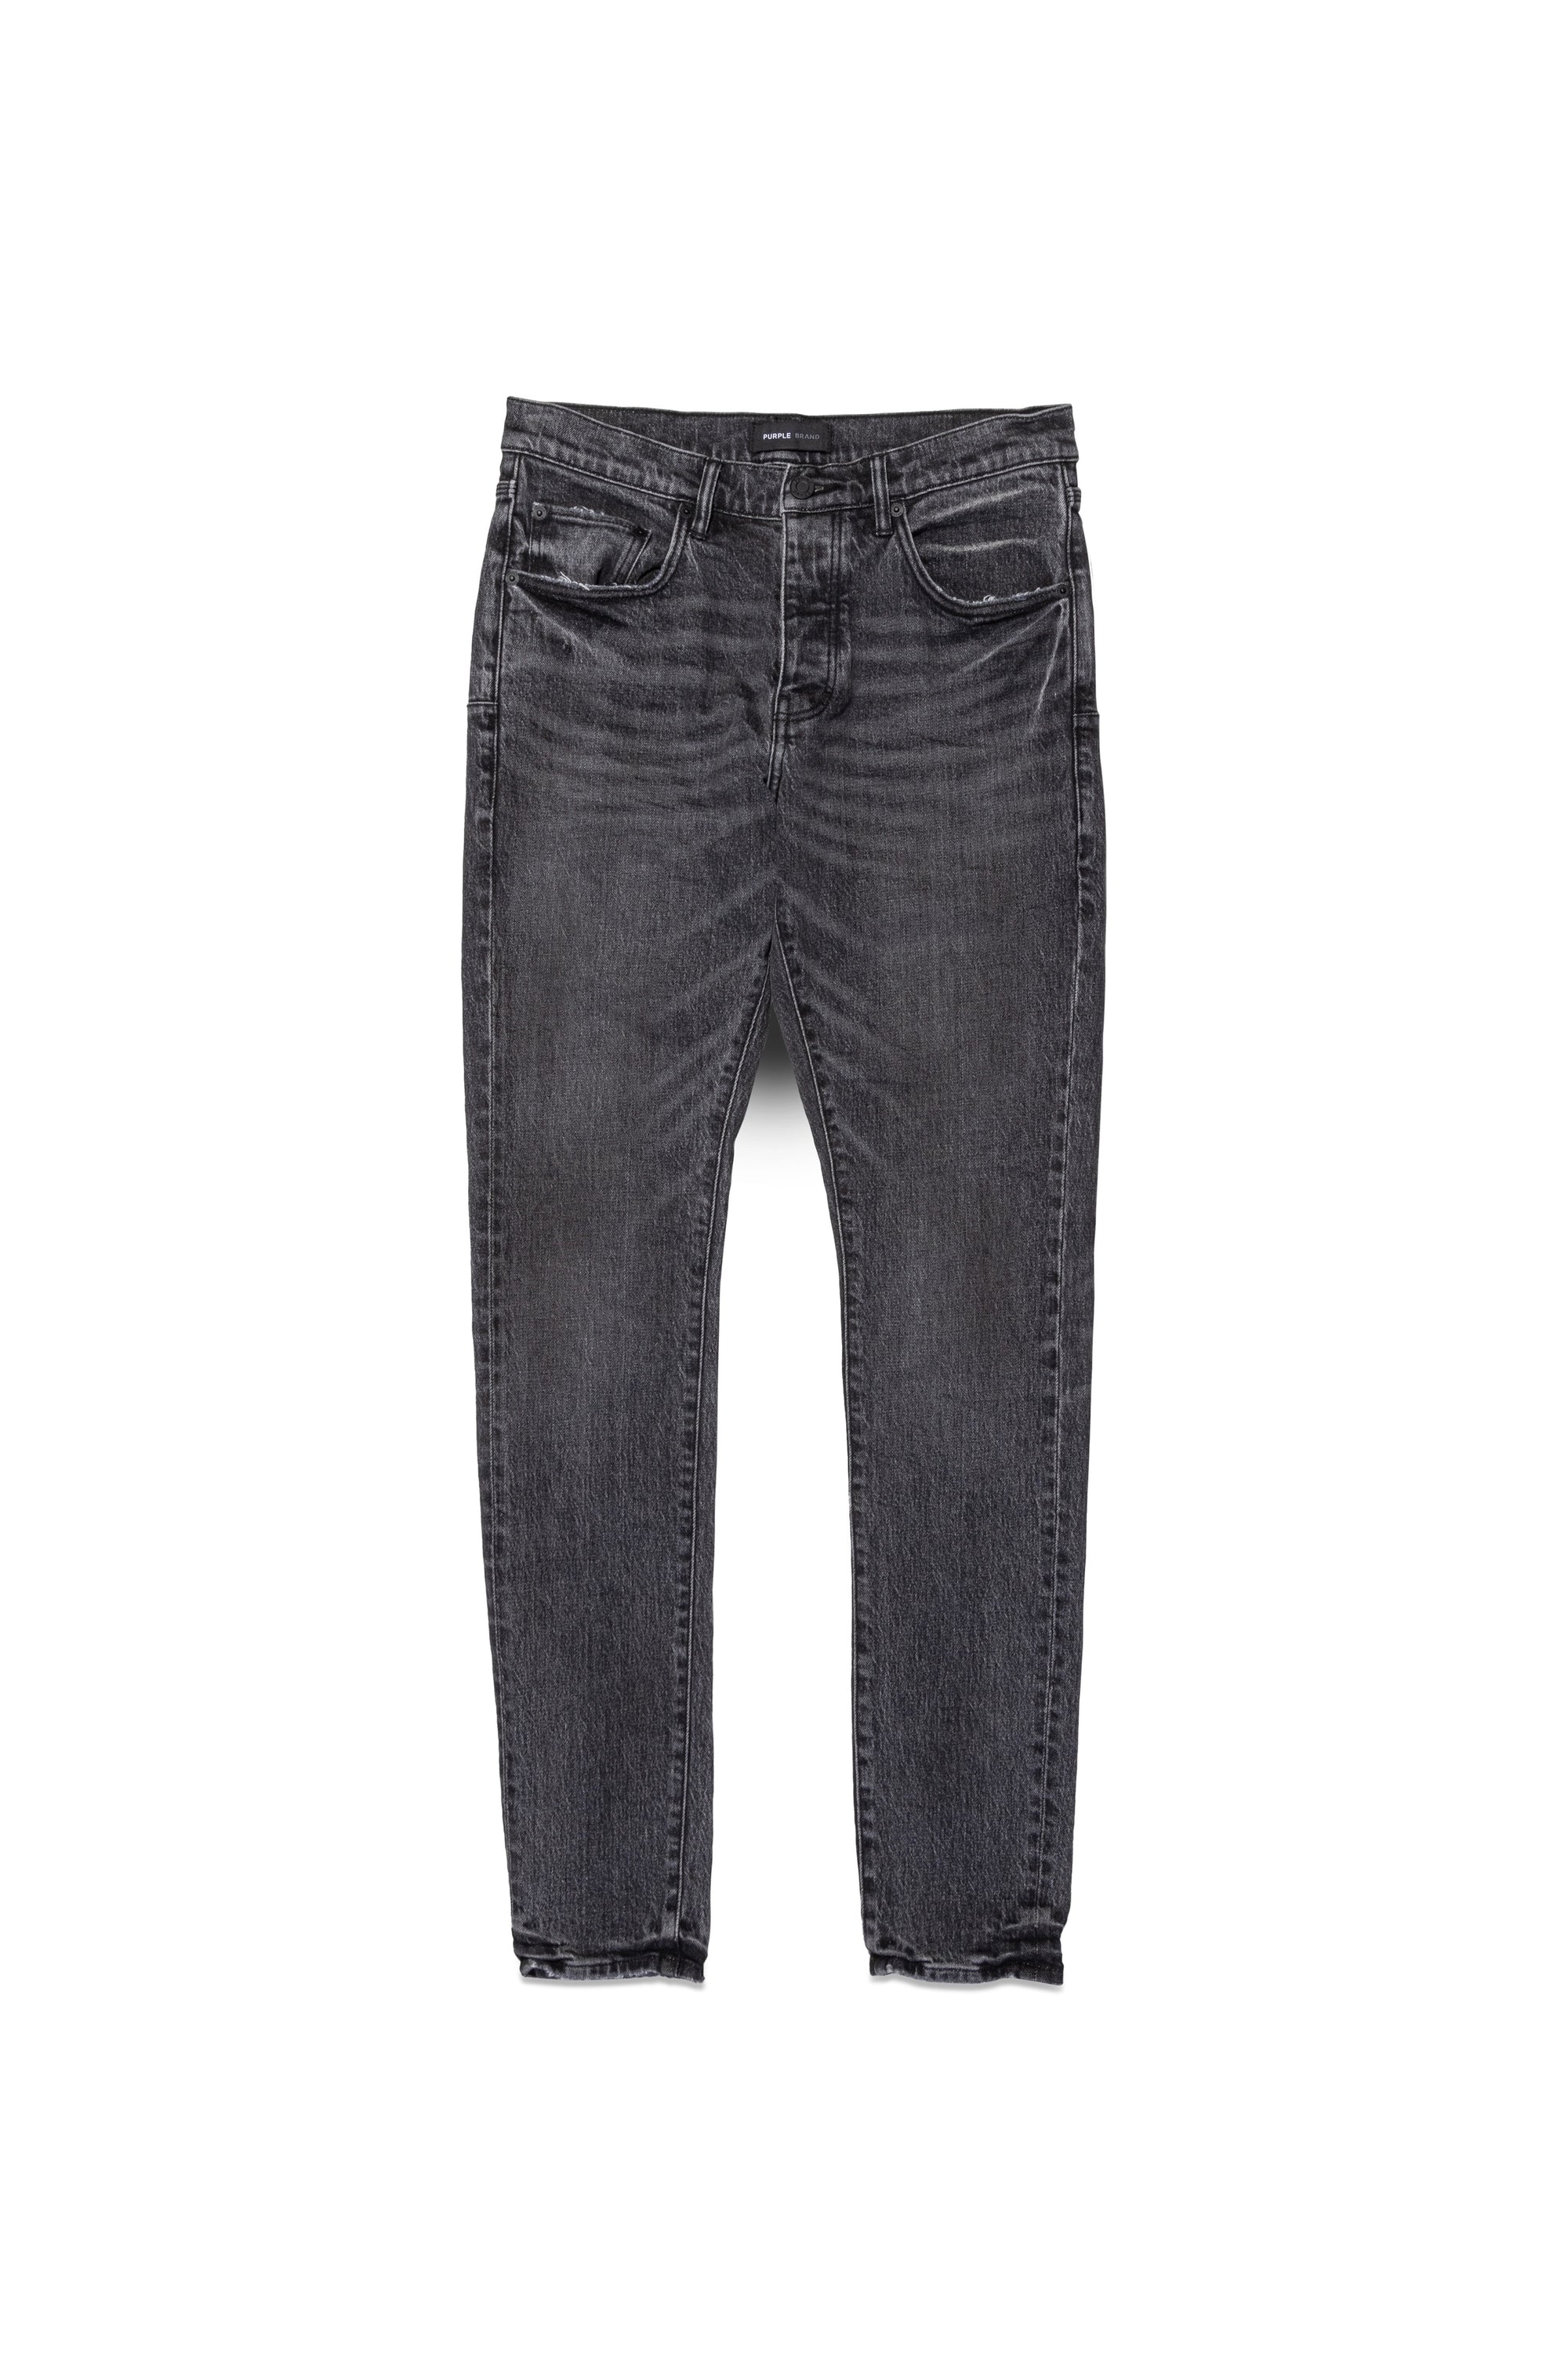 Purple Brand New Fade Slim Jeans-BLACK - Civilized Nation - Official Site